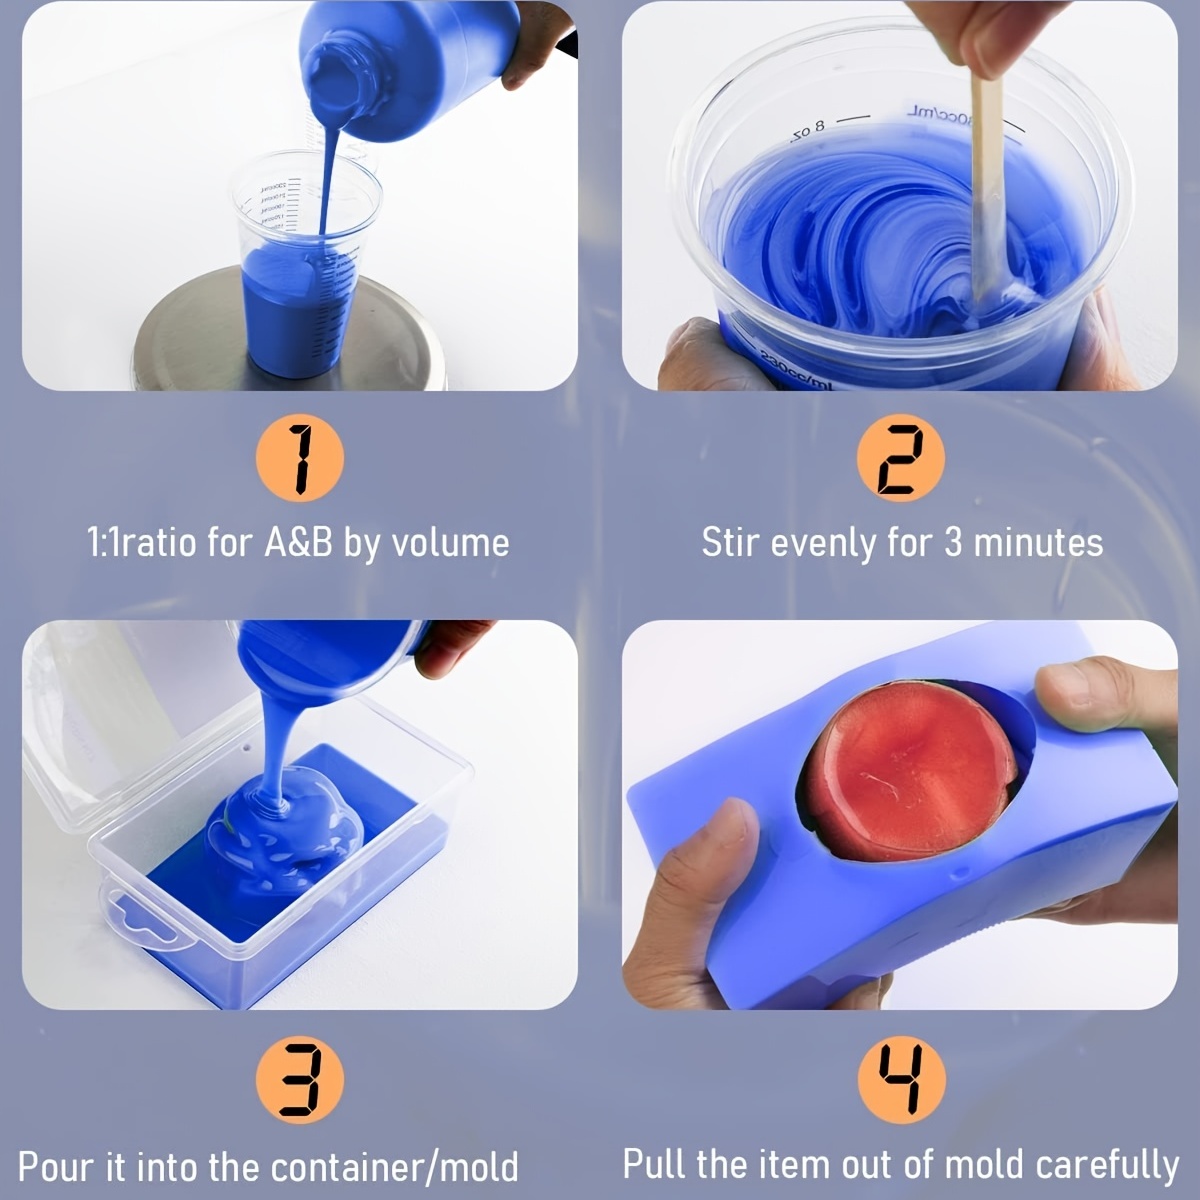 Liquid Purple Silicone Rubber Set 20a Mold Making 1:1 Mixing - Temu